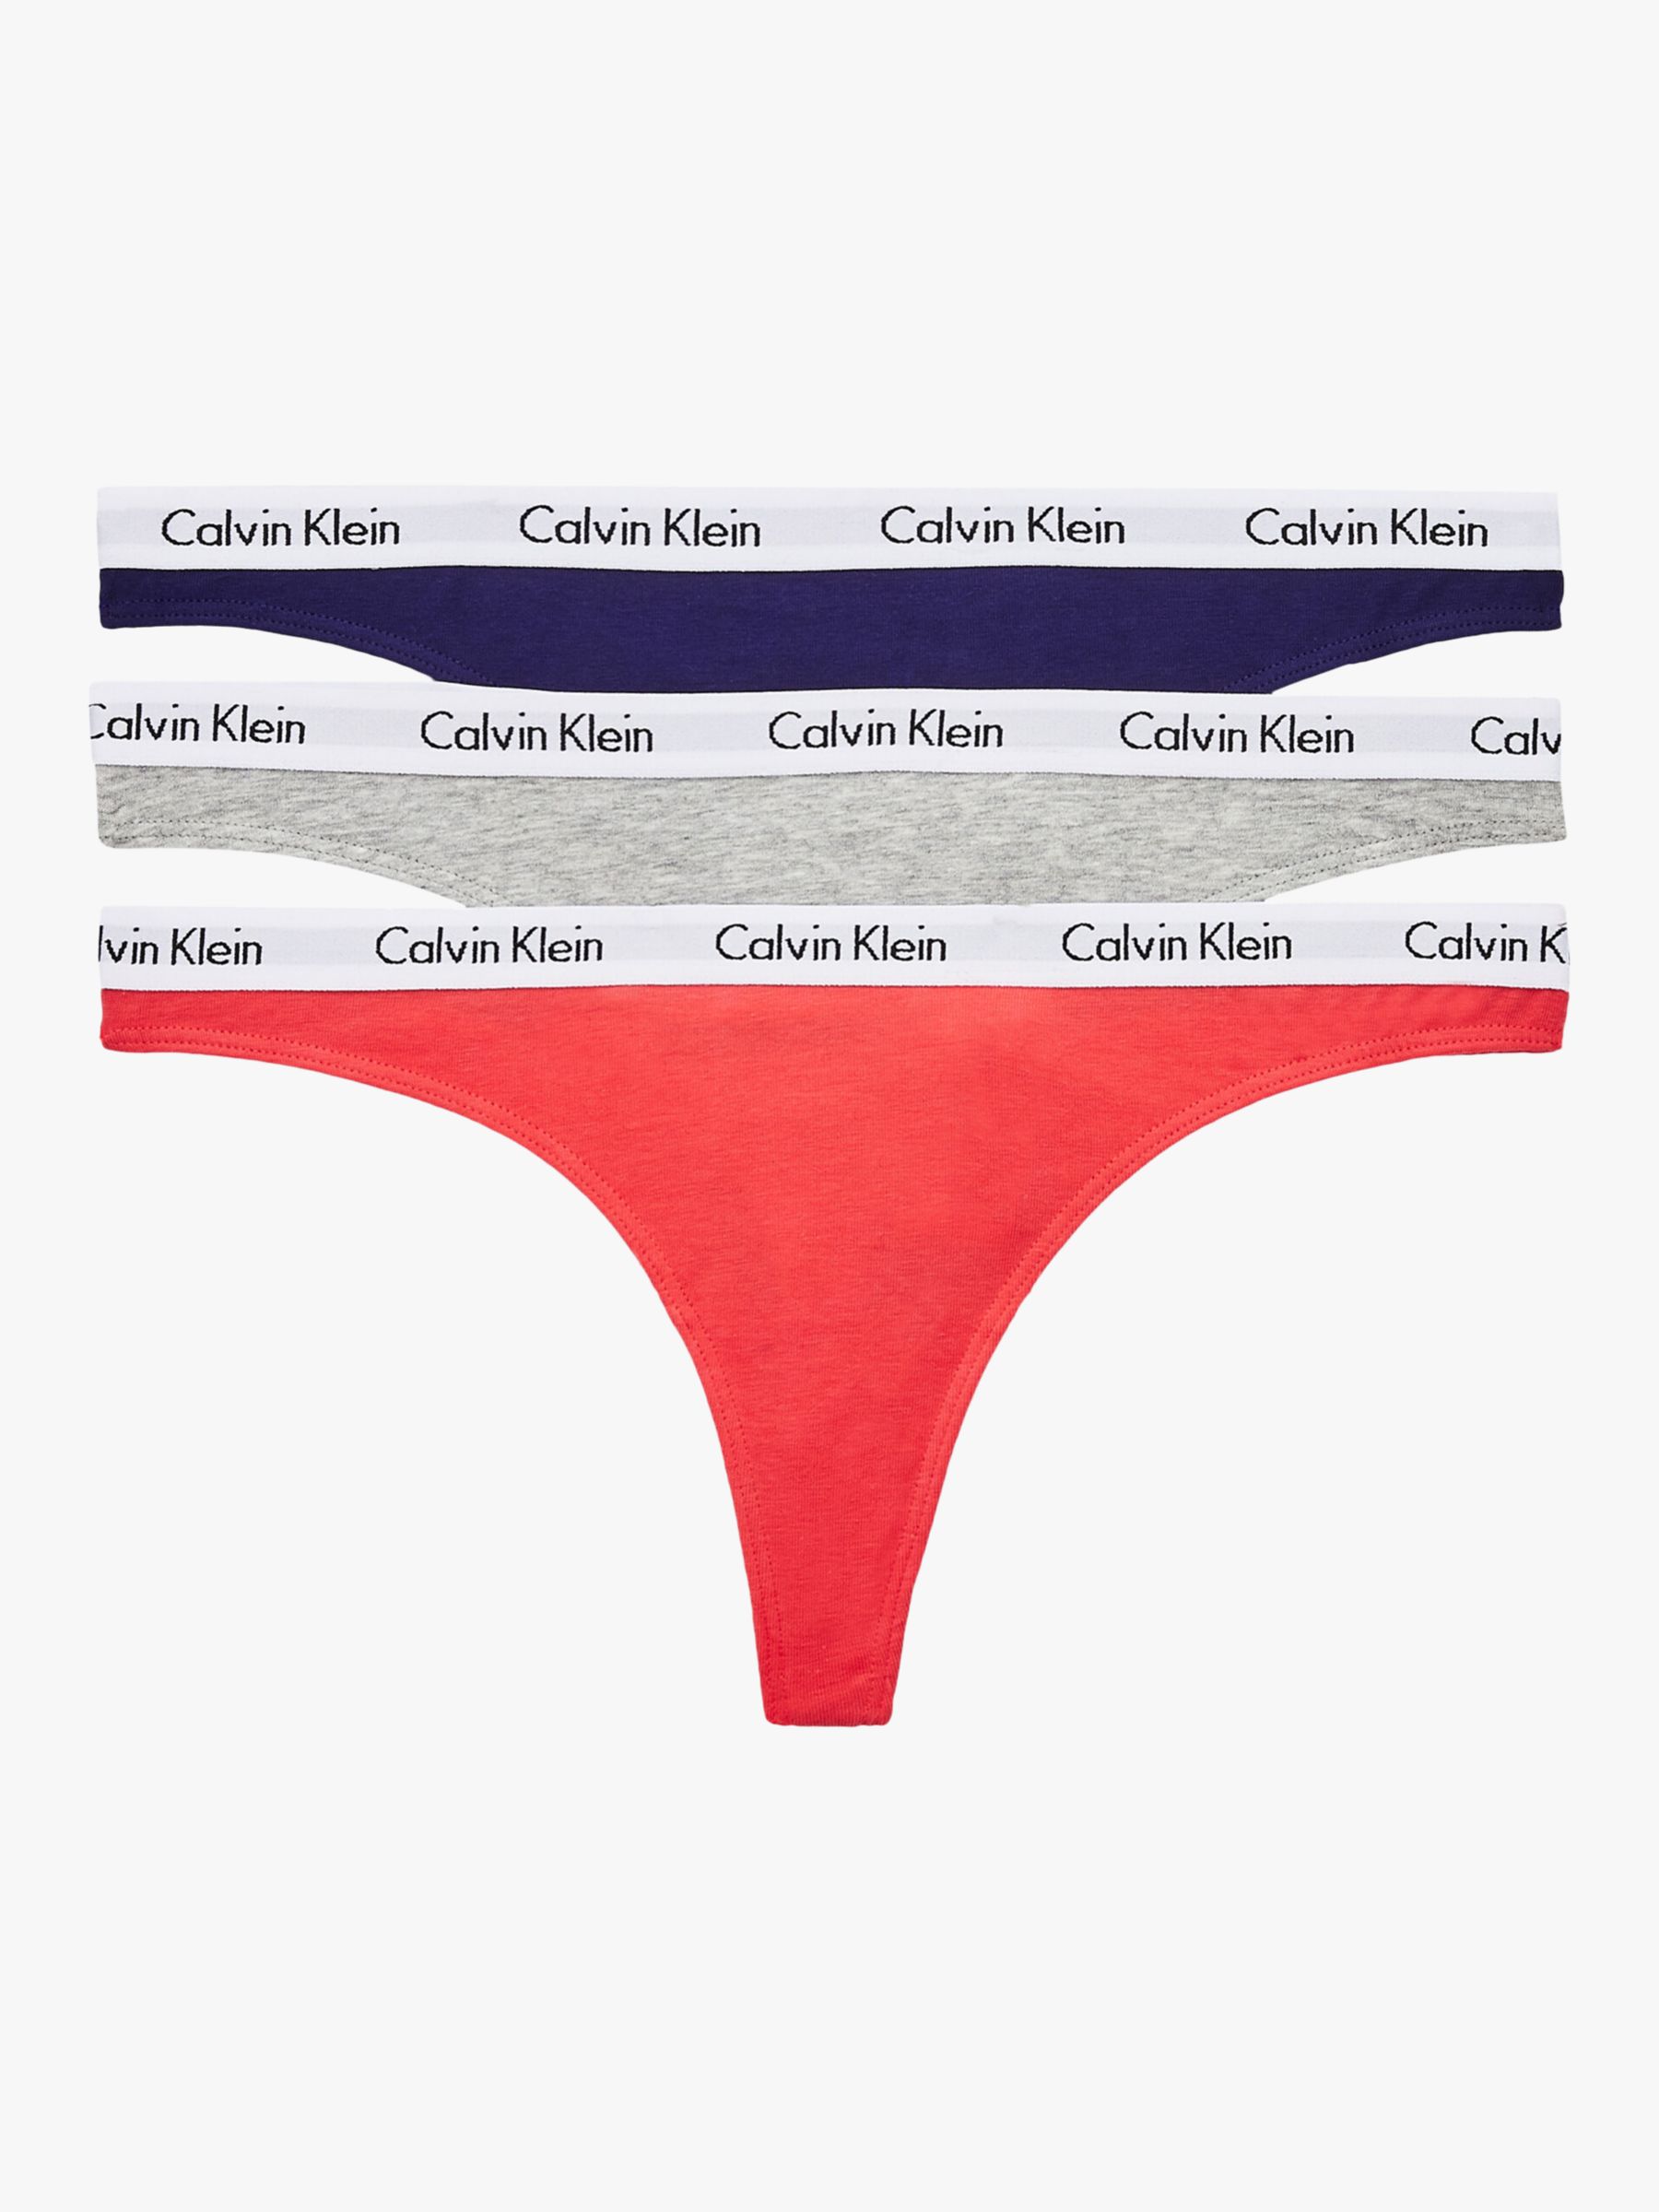 Calvin Klein Carousel Thongs, Pack of 3, Multi